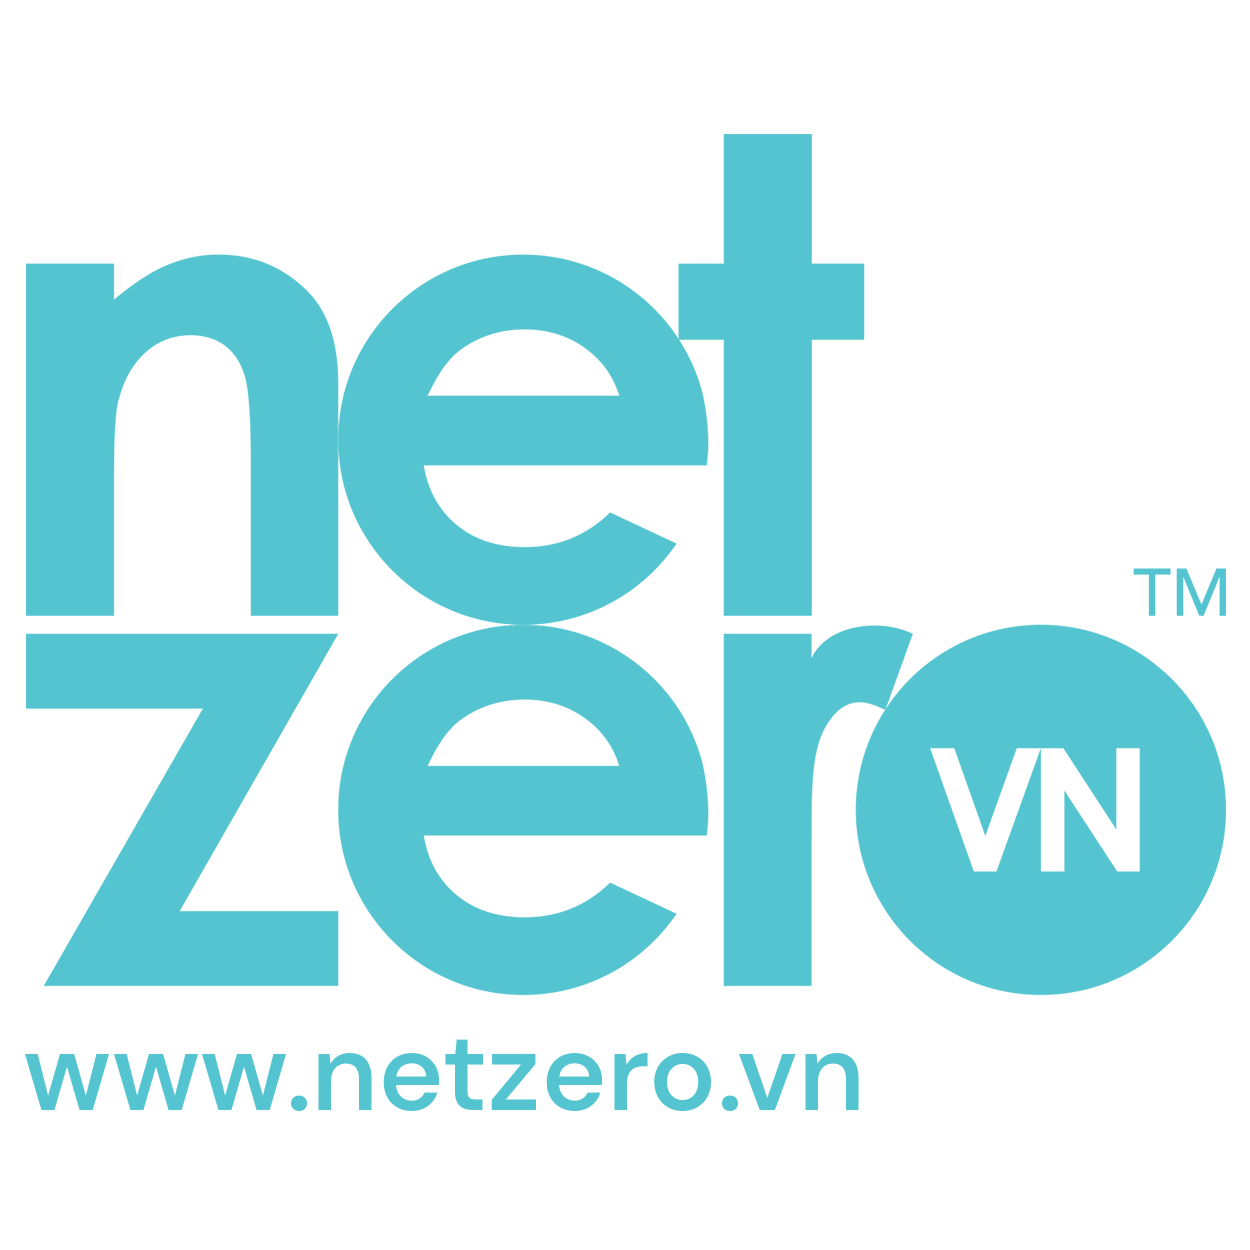 NetZero.VN - Net Zero Viet Nam